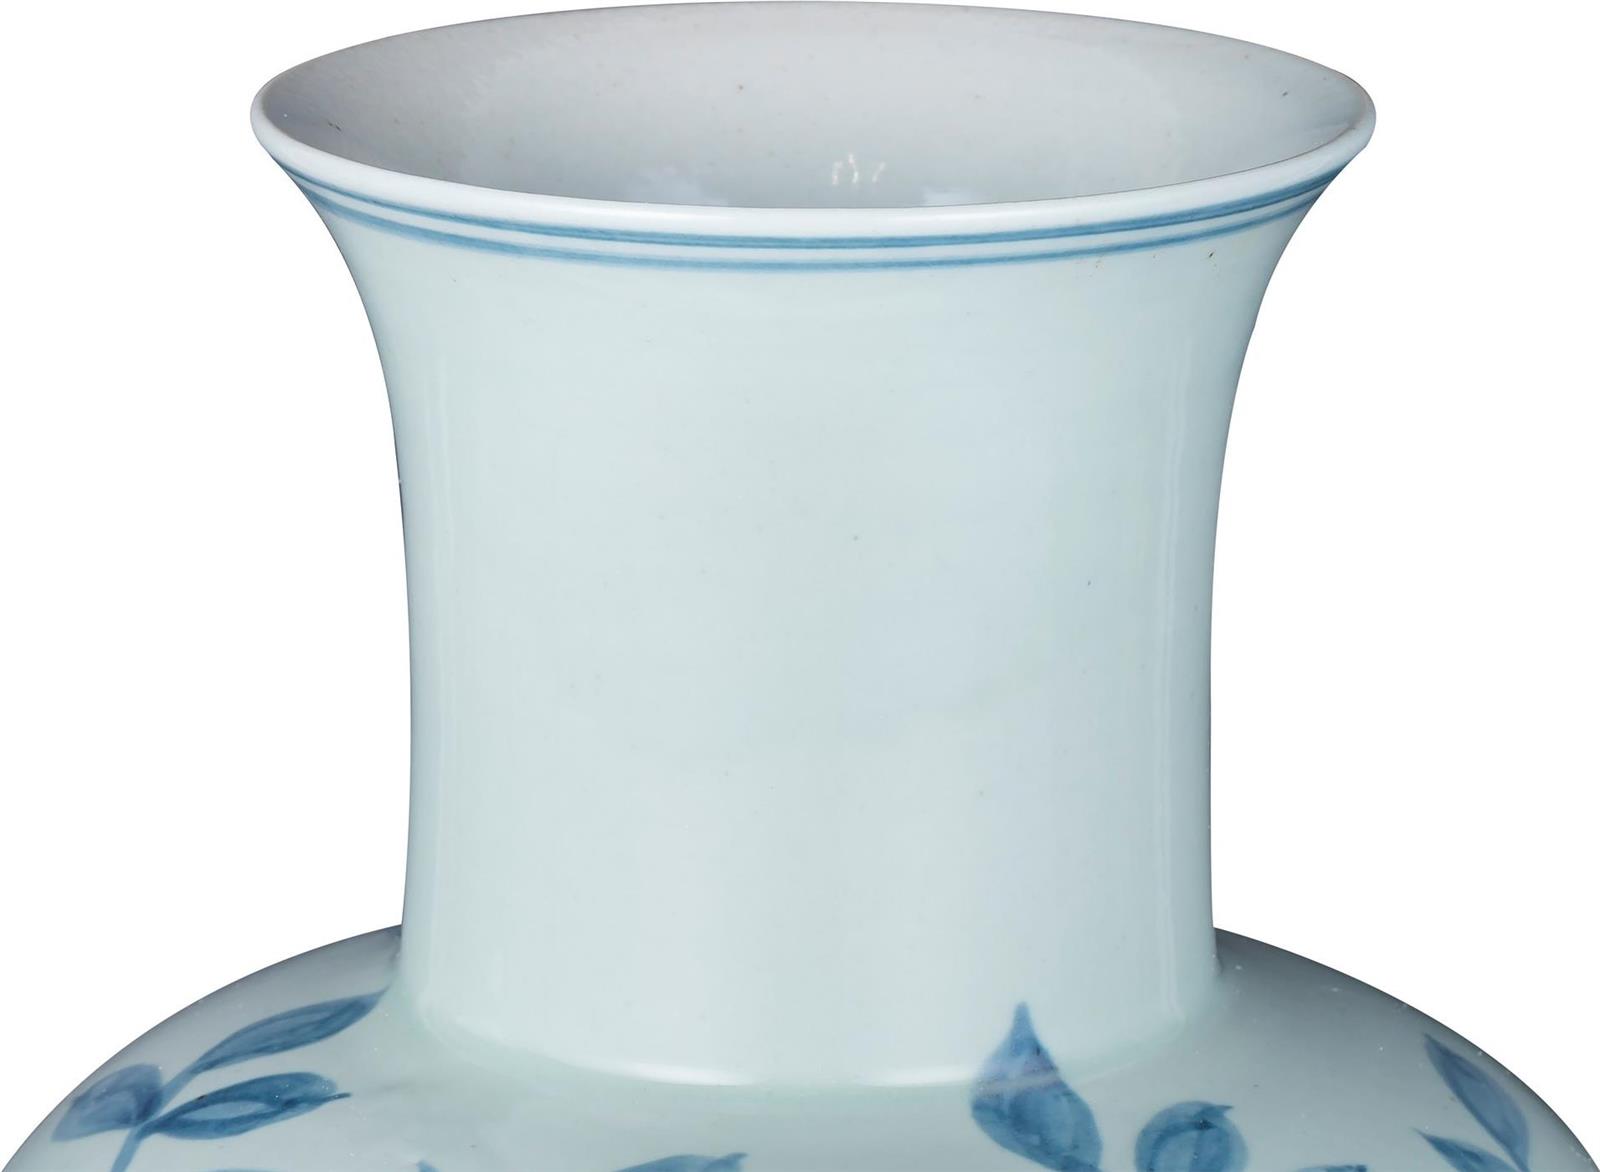 Vase Pheasant Flower Stool Blue White Ceramic Handmade Hand-Crafted-Image 2